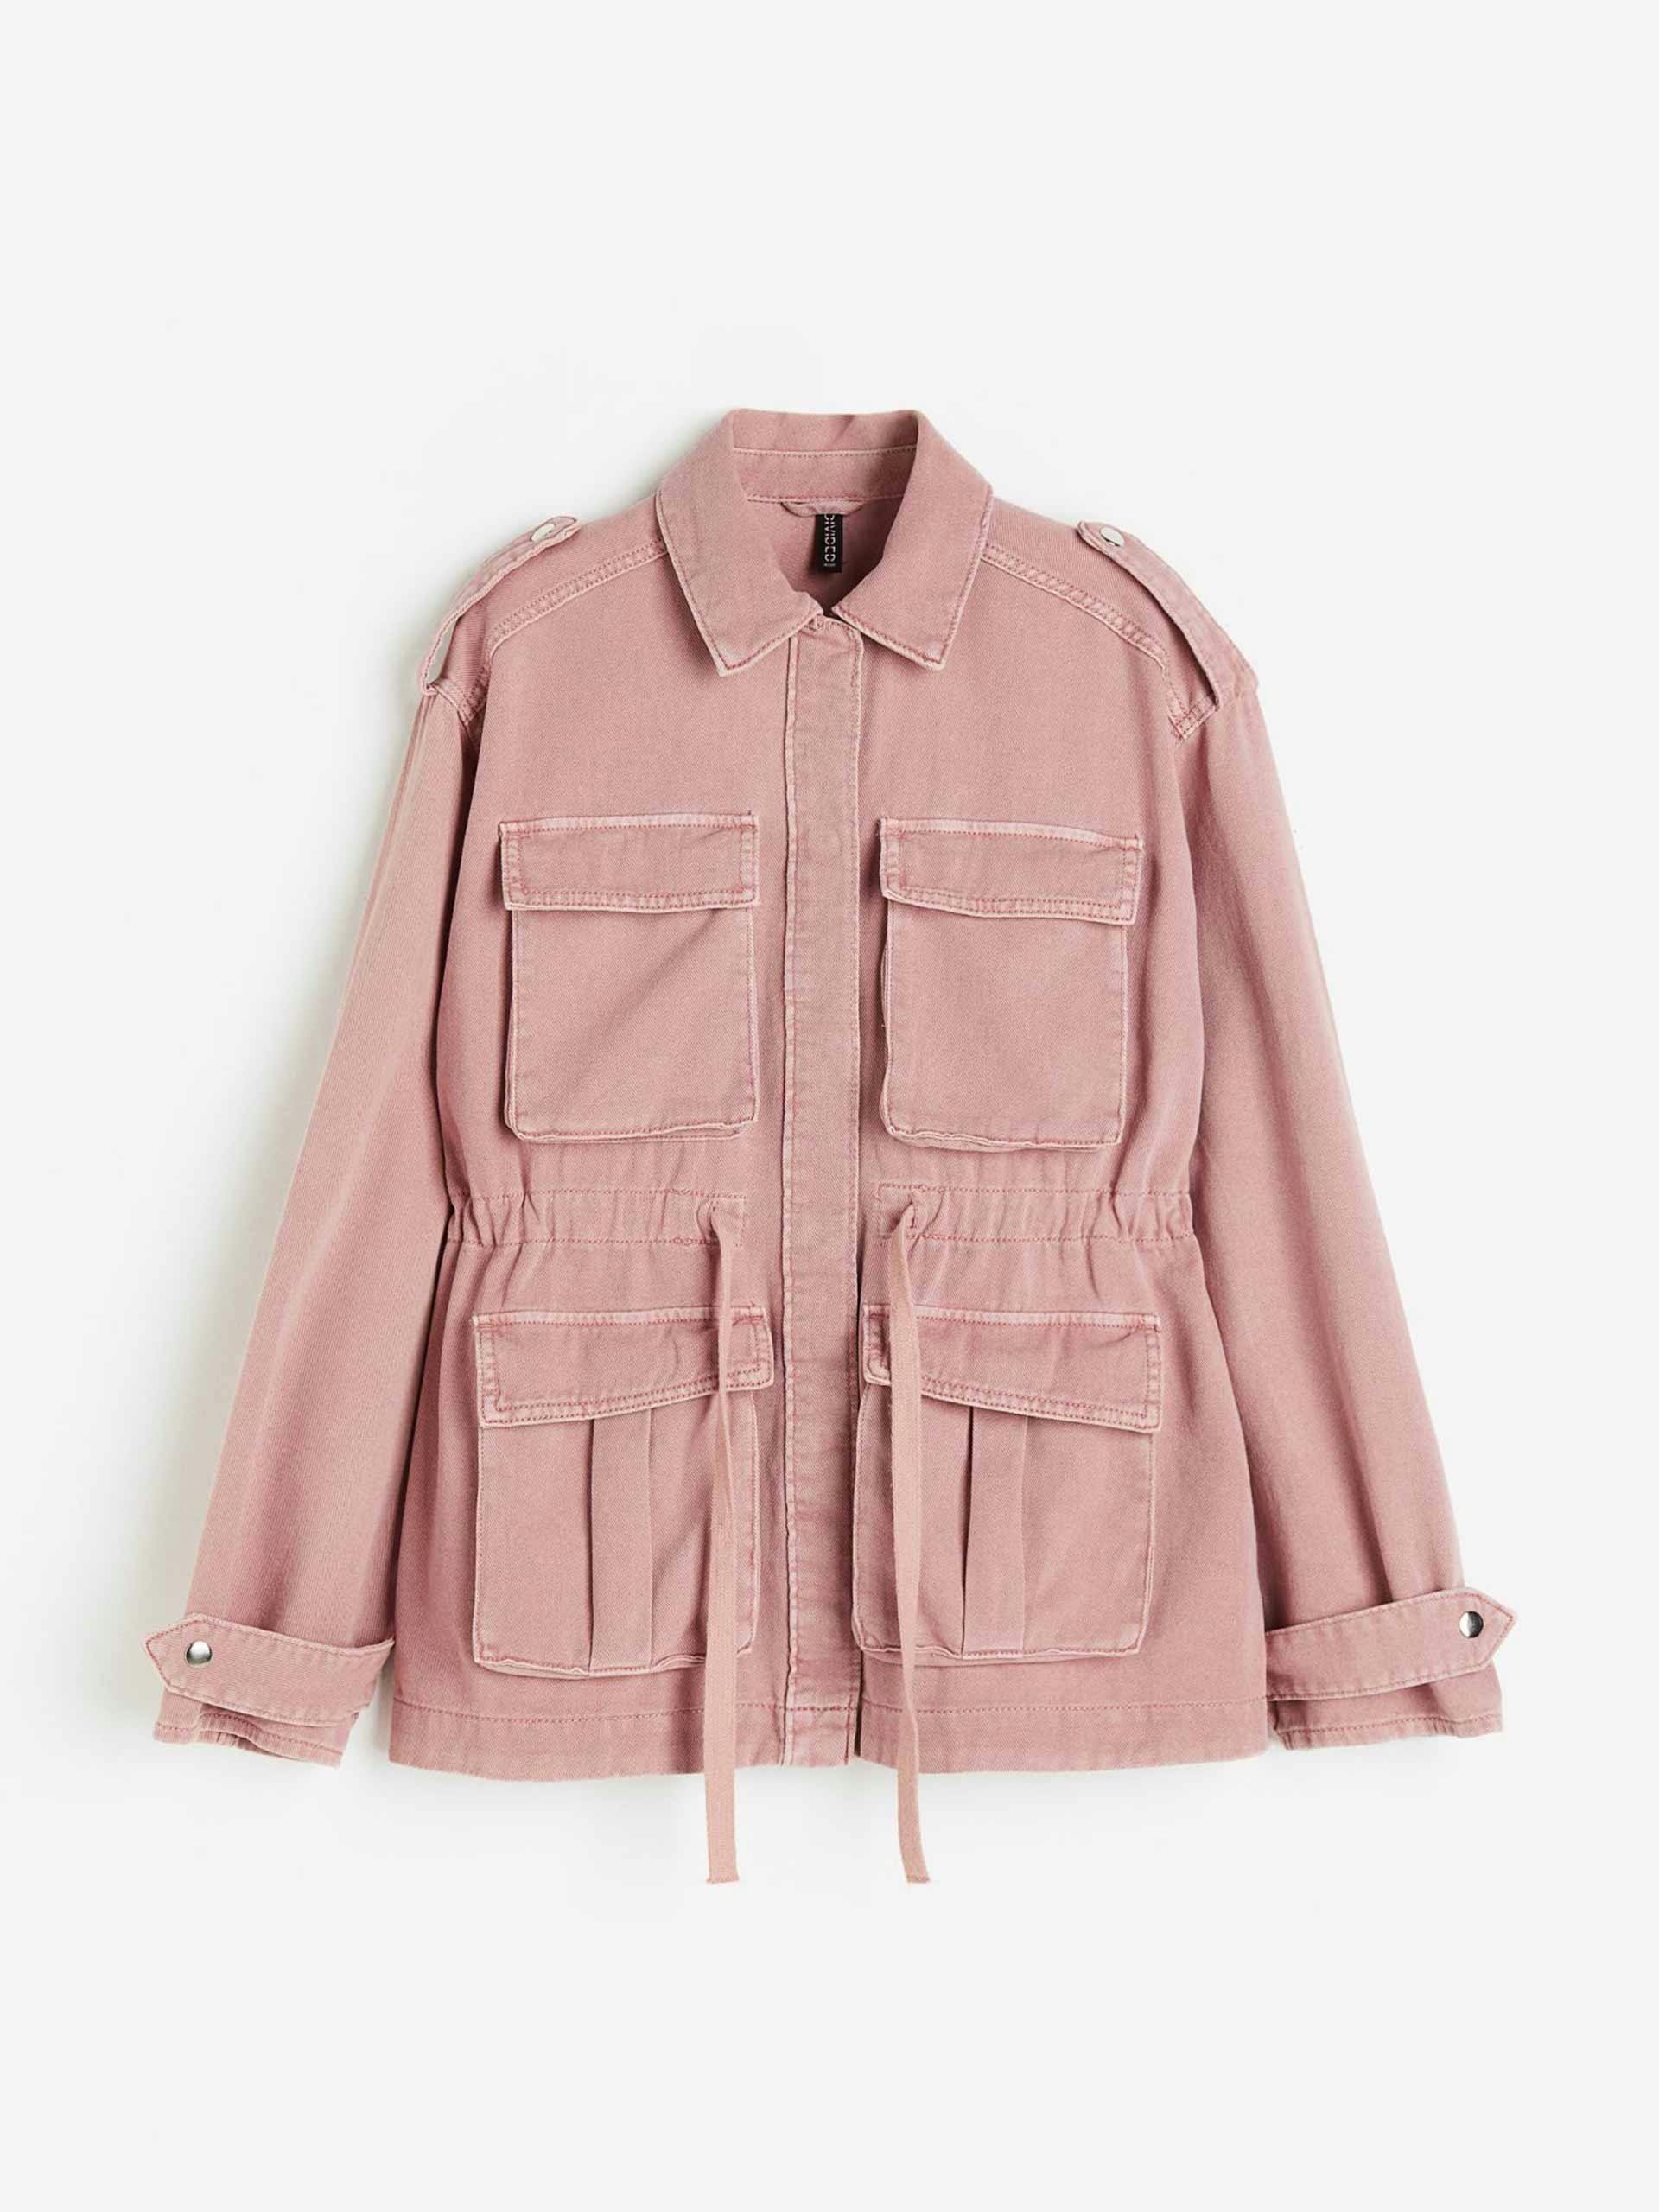 Pink utility jacket